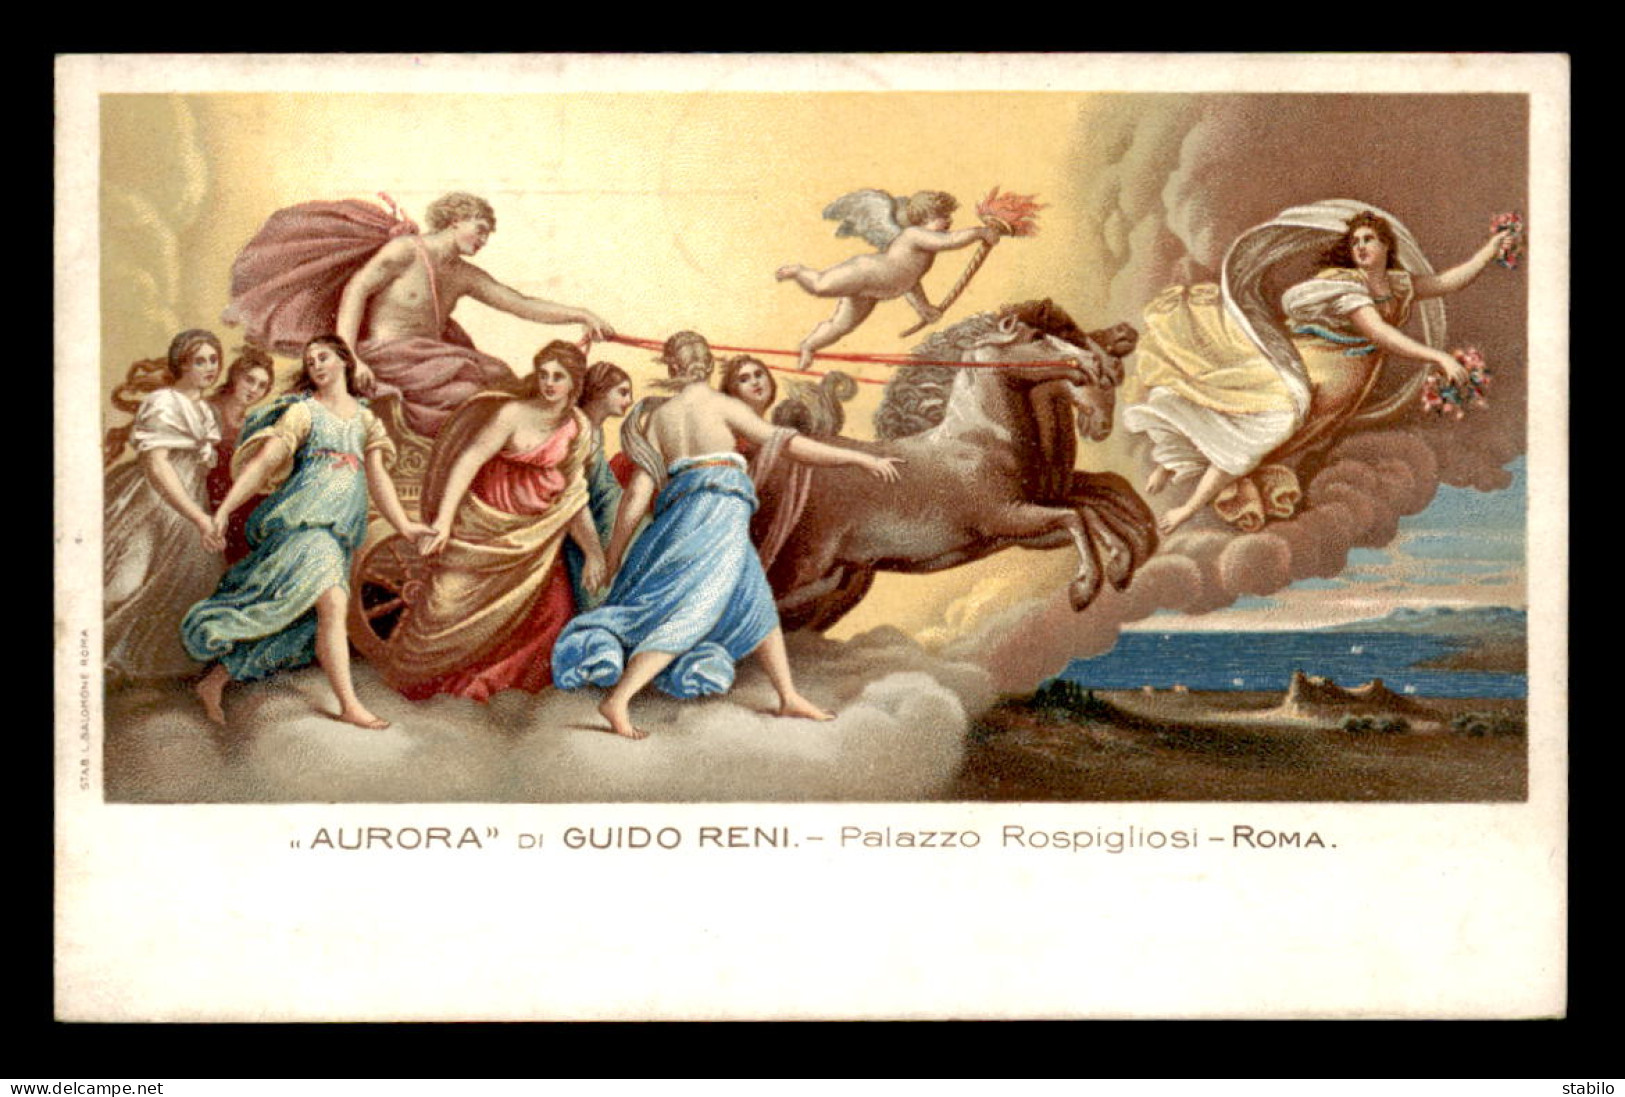 ITALIE - ROMA - PALAZZO ROSPIGLIOSI - AURORA, DI GUIDO RENI - Musées